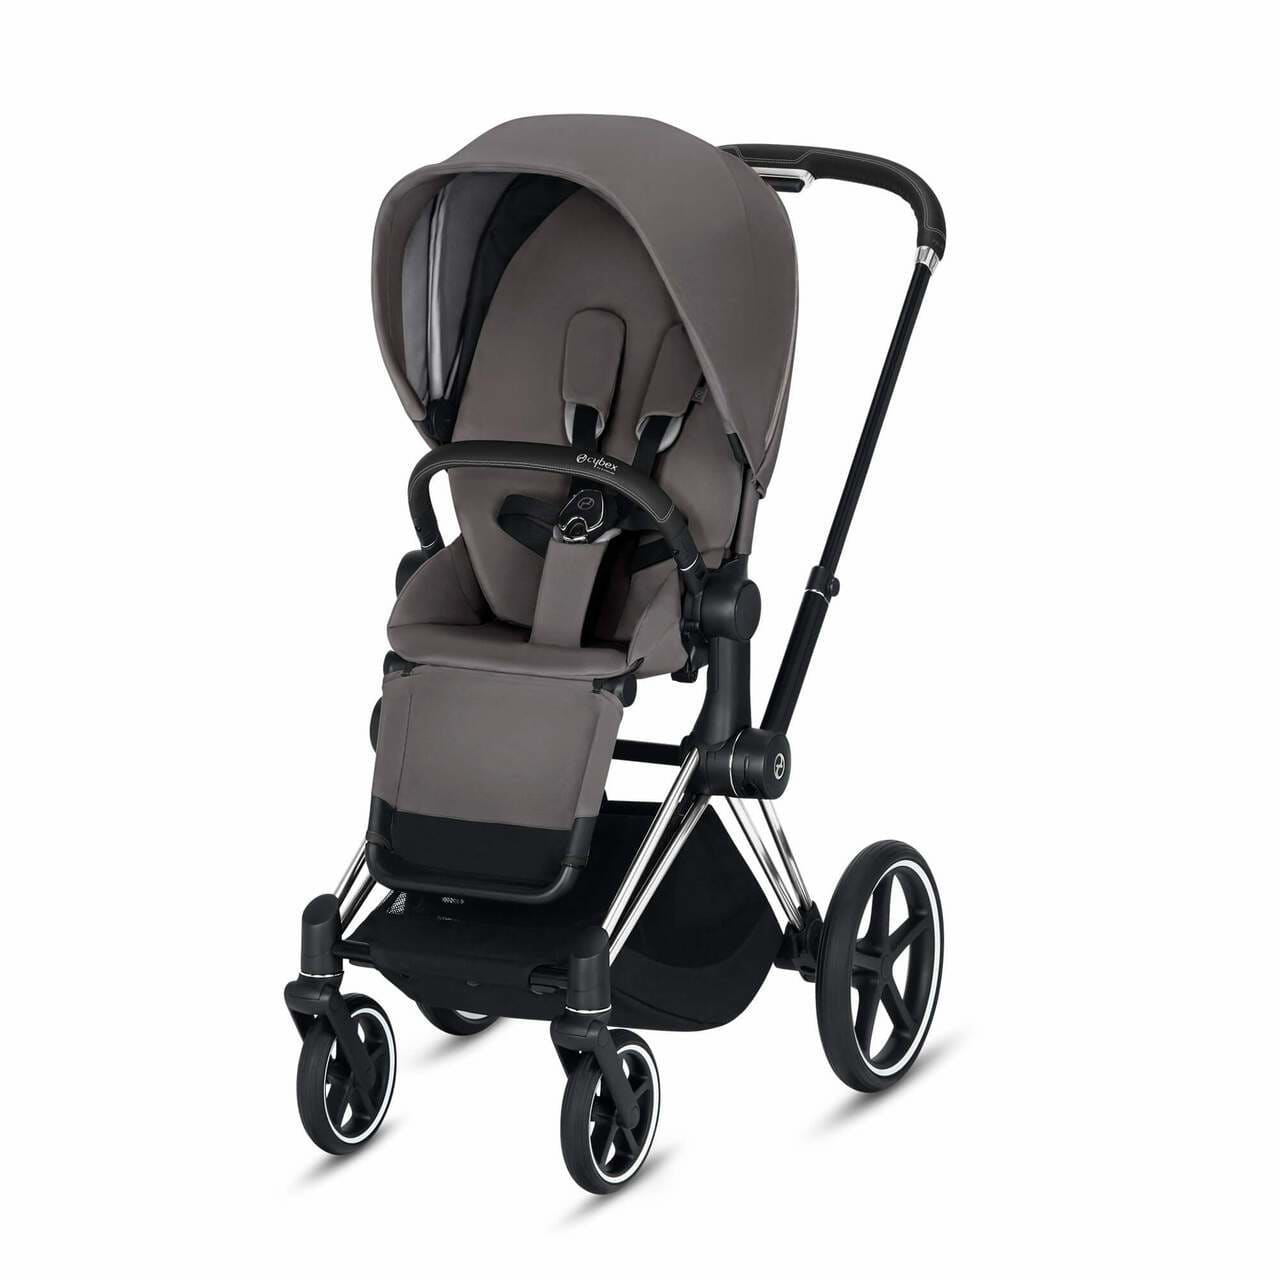 CYBEX ePriam 3-in-1 Travel System Chrome with Black Details Baby Stroller – Manhattan Grey 519003541 4058511706504